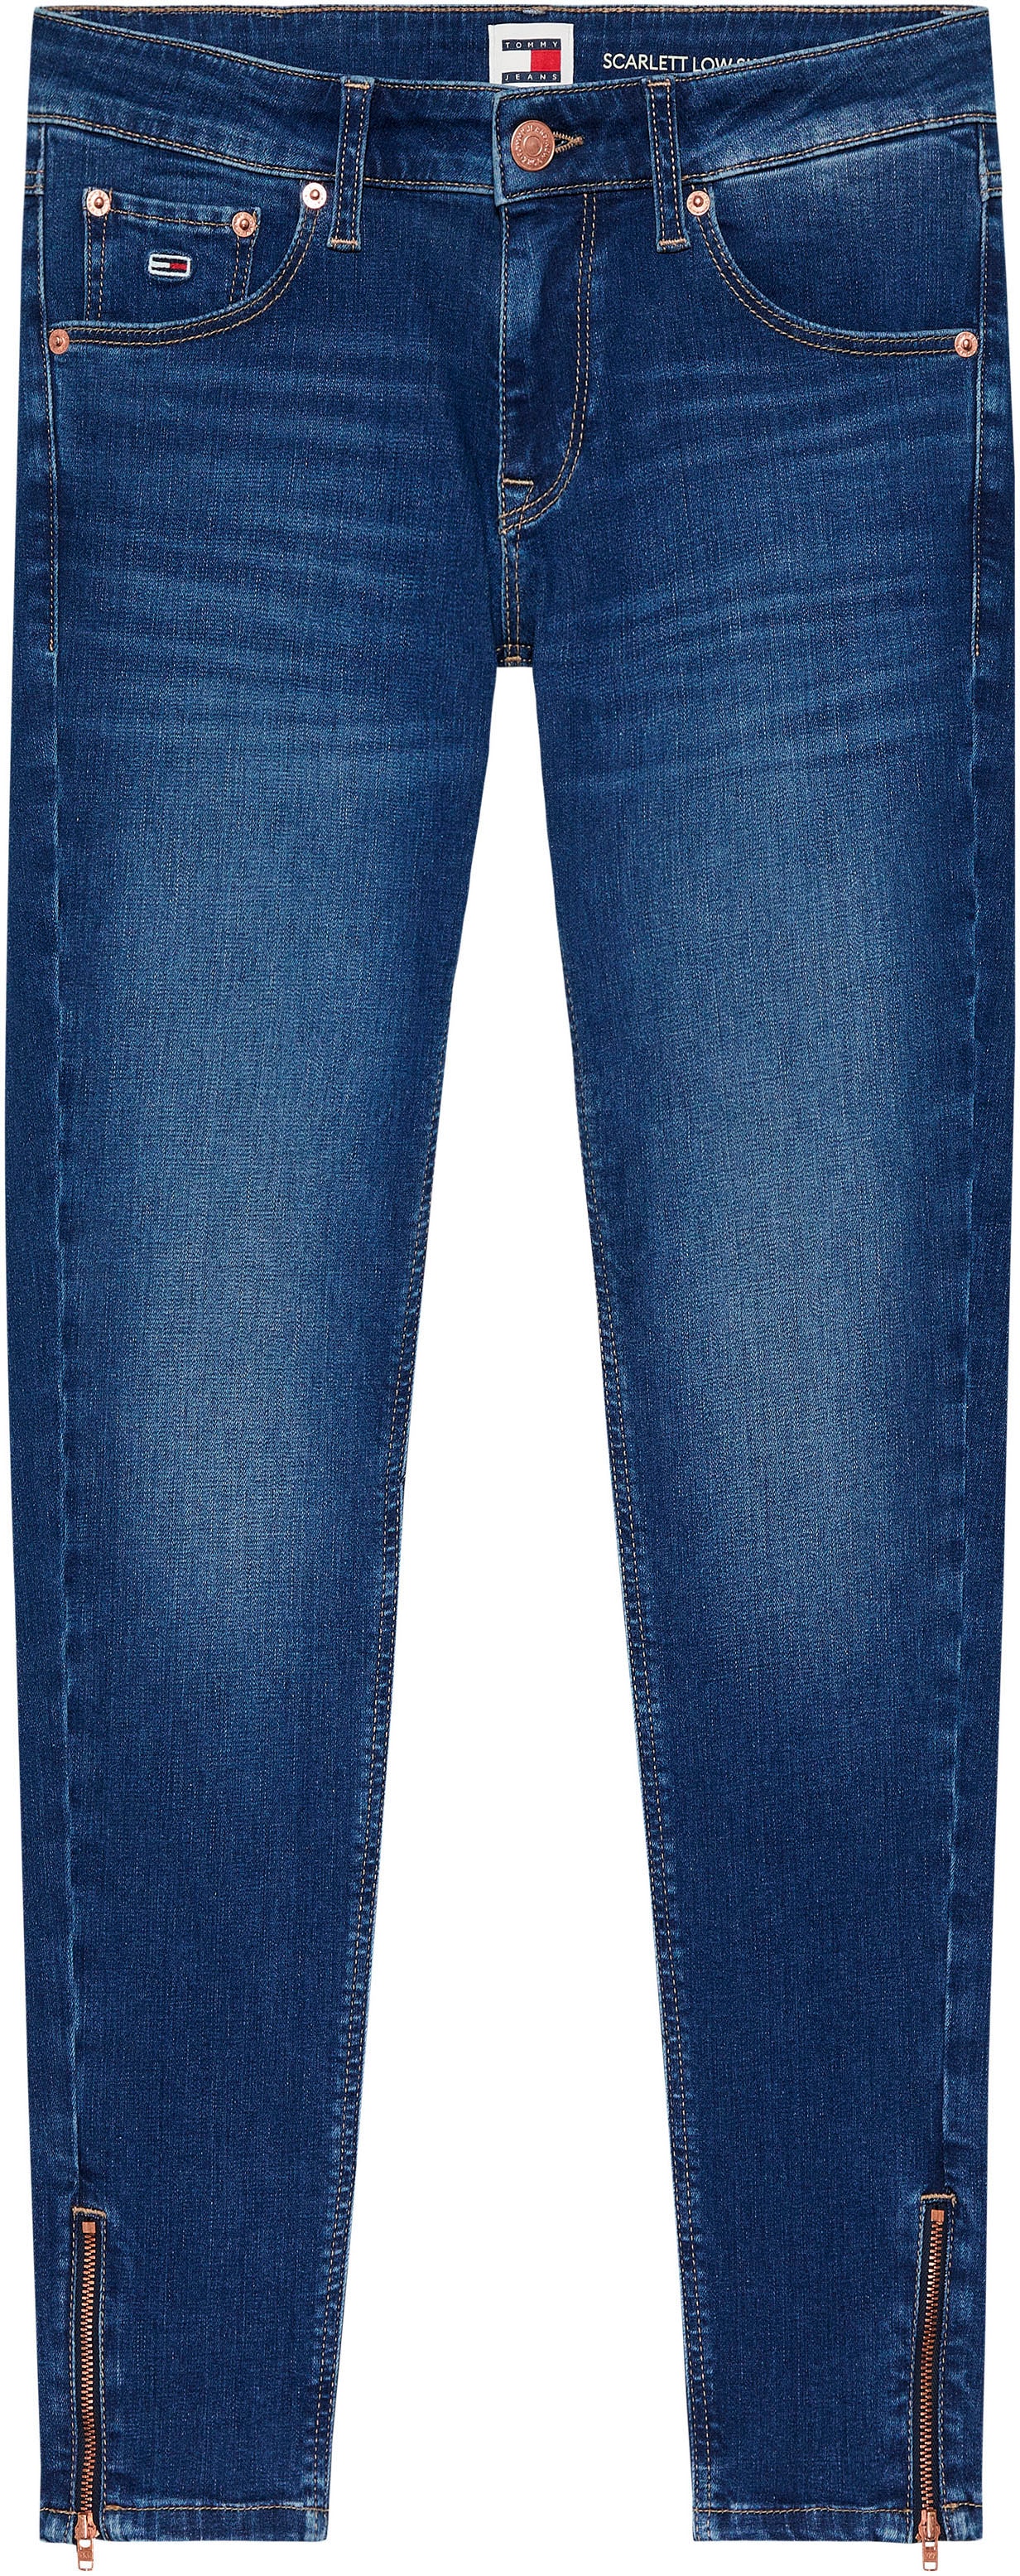 Jeans mit AH1239«, Tommy ZIP ANK SKN | BAUR für Skinny-fit-Jeans bestellen »SCARLETT LW Lederlogopatch